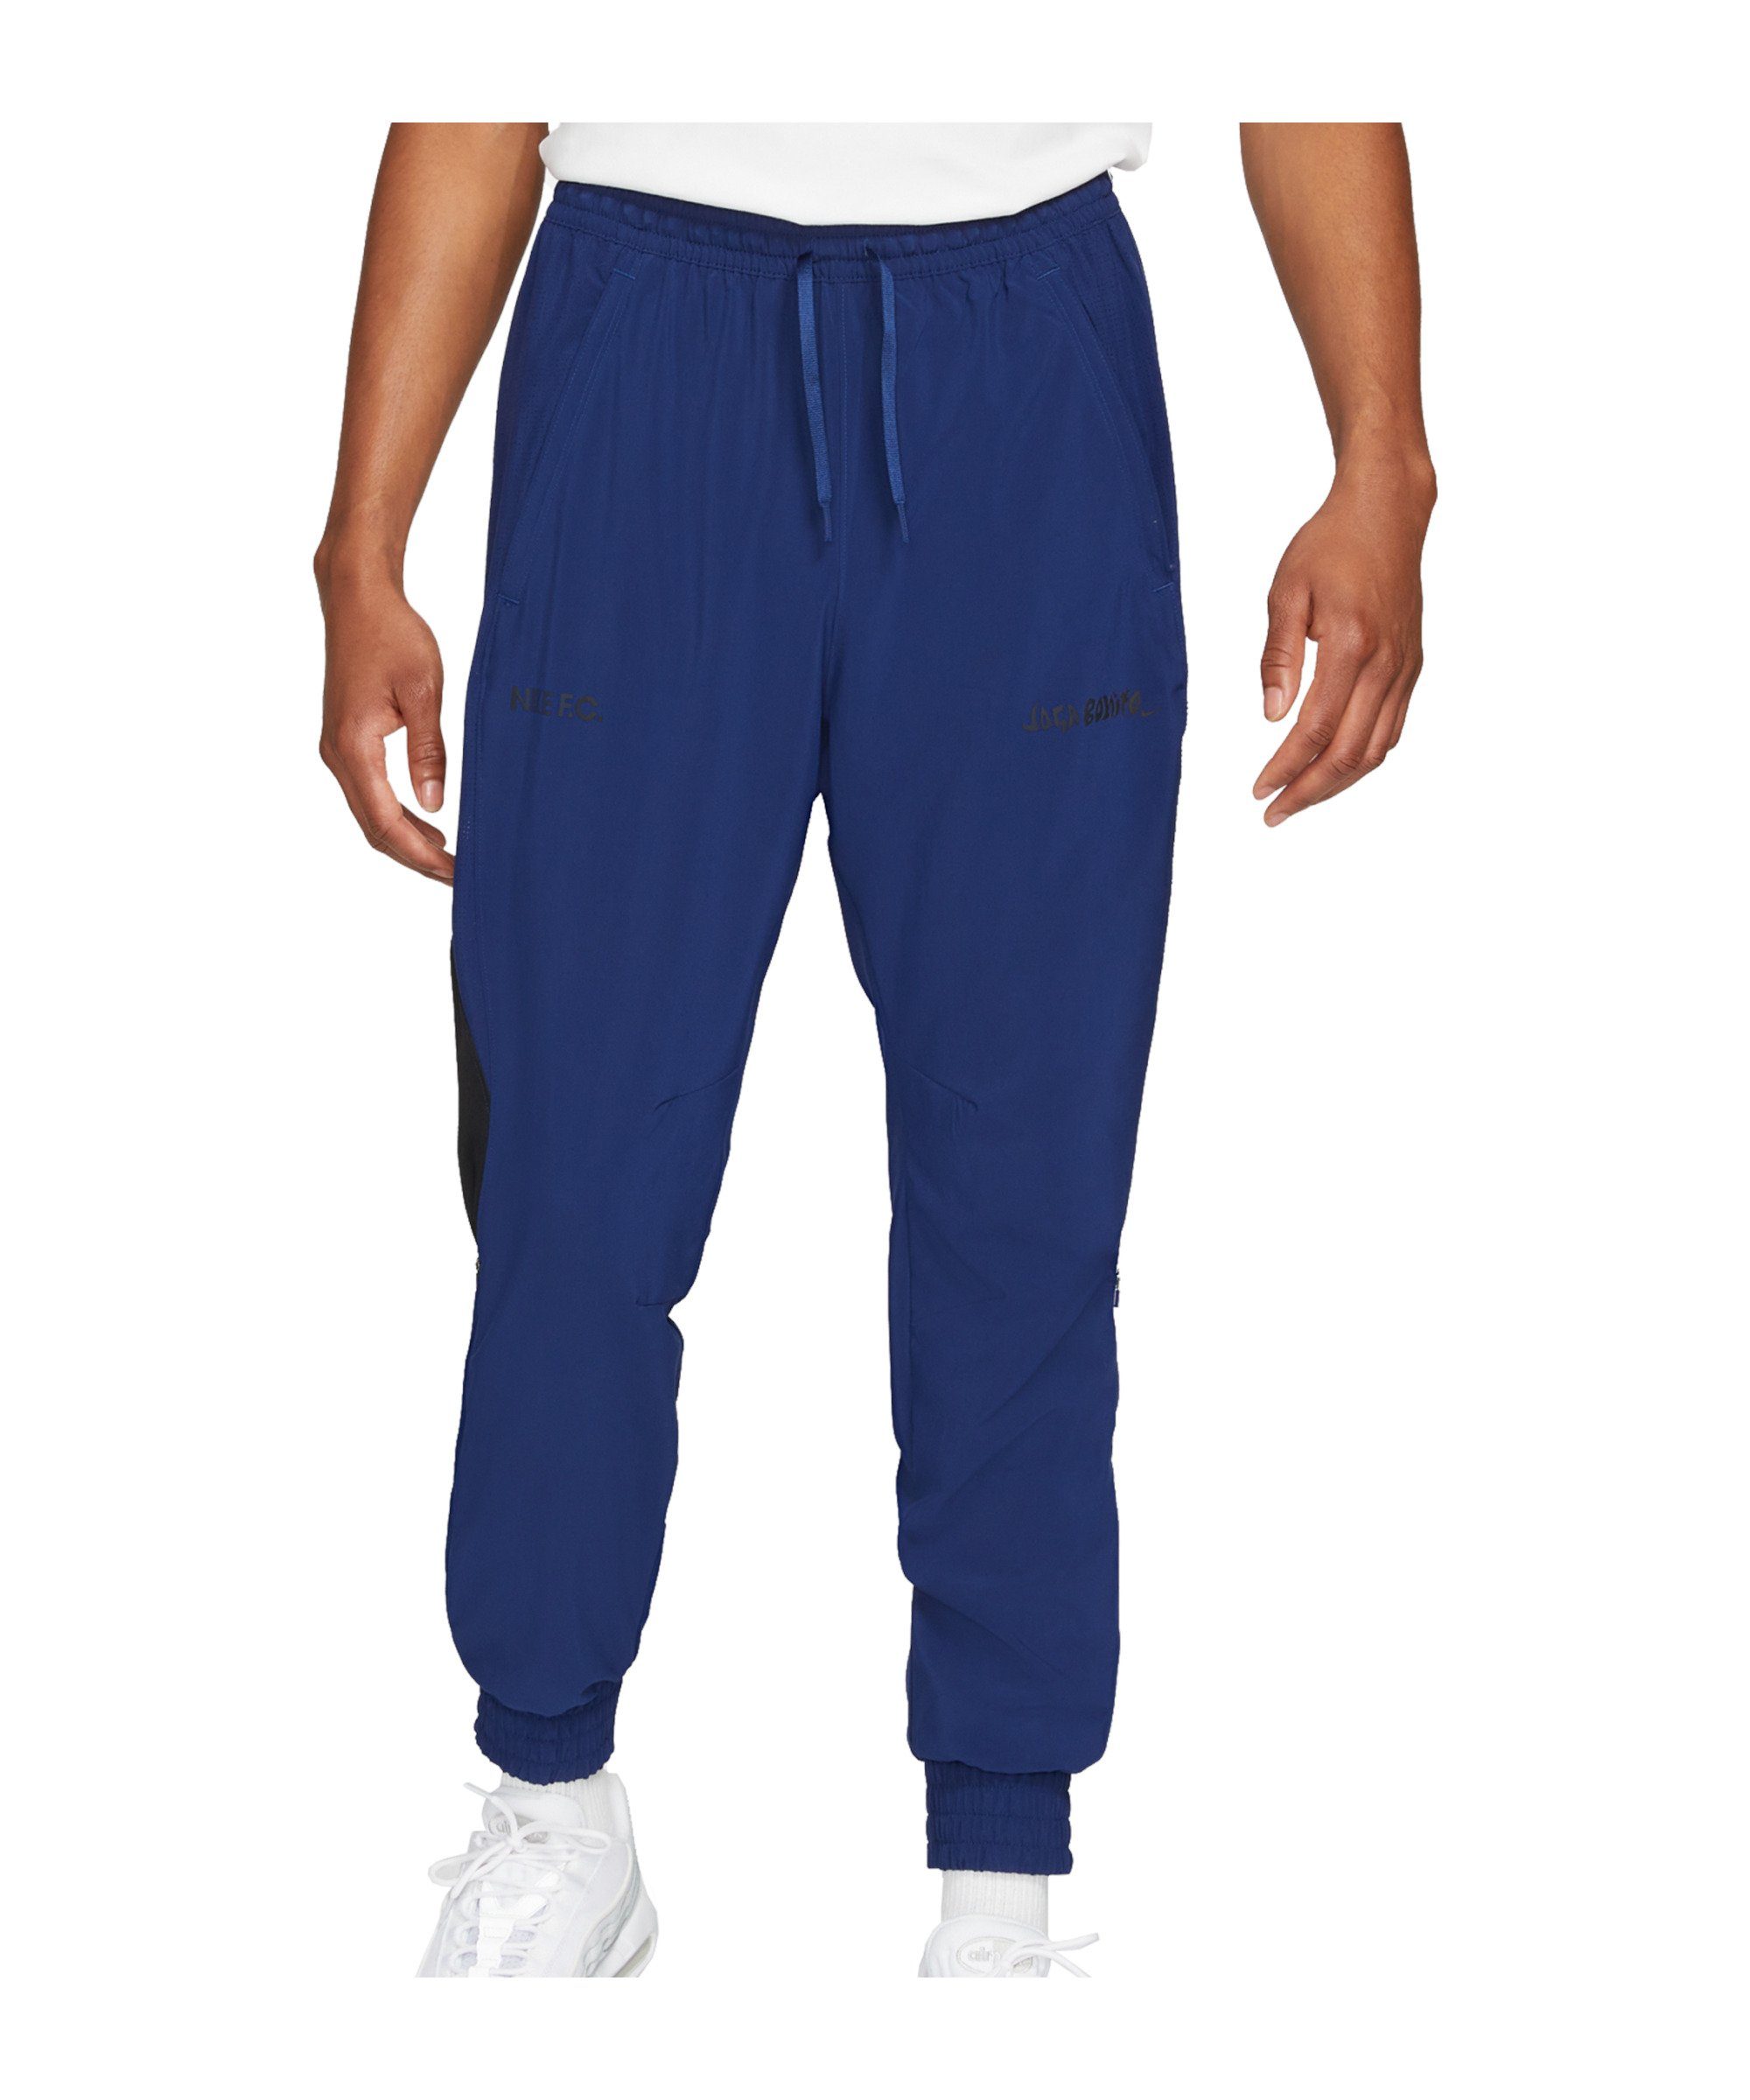 Bonito Joga F.C. Sportswear Jogginghose blauschwarz Woven Nike Hose